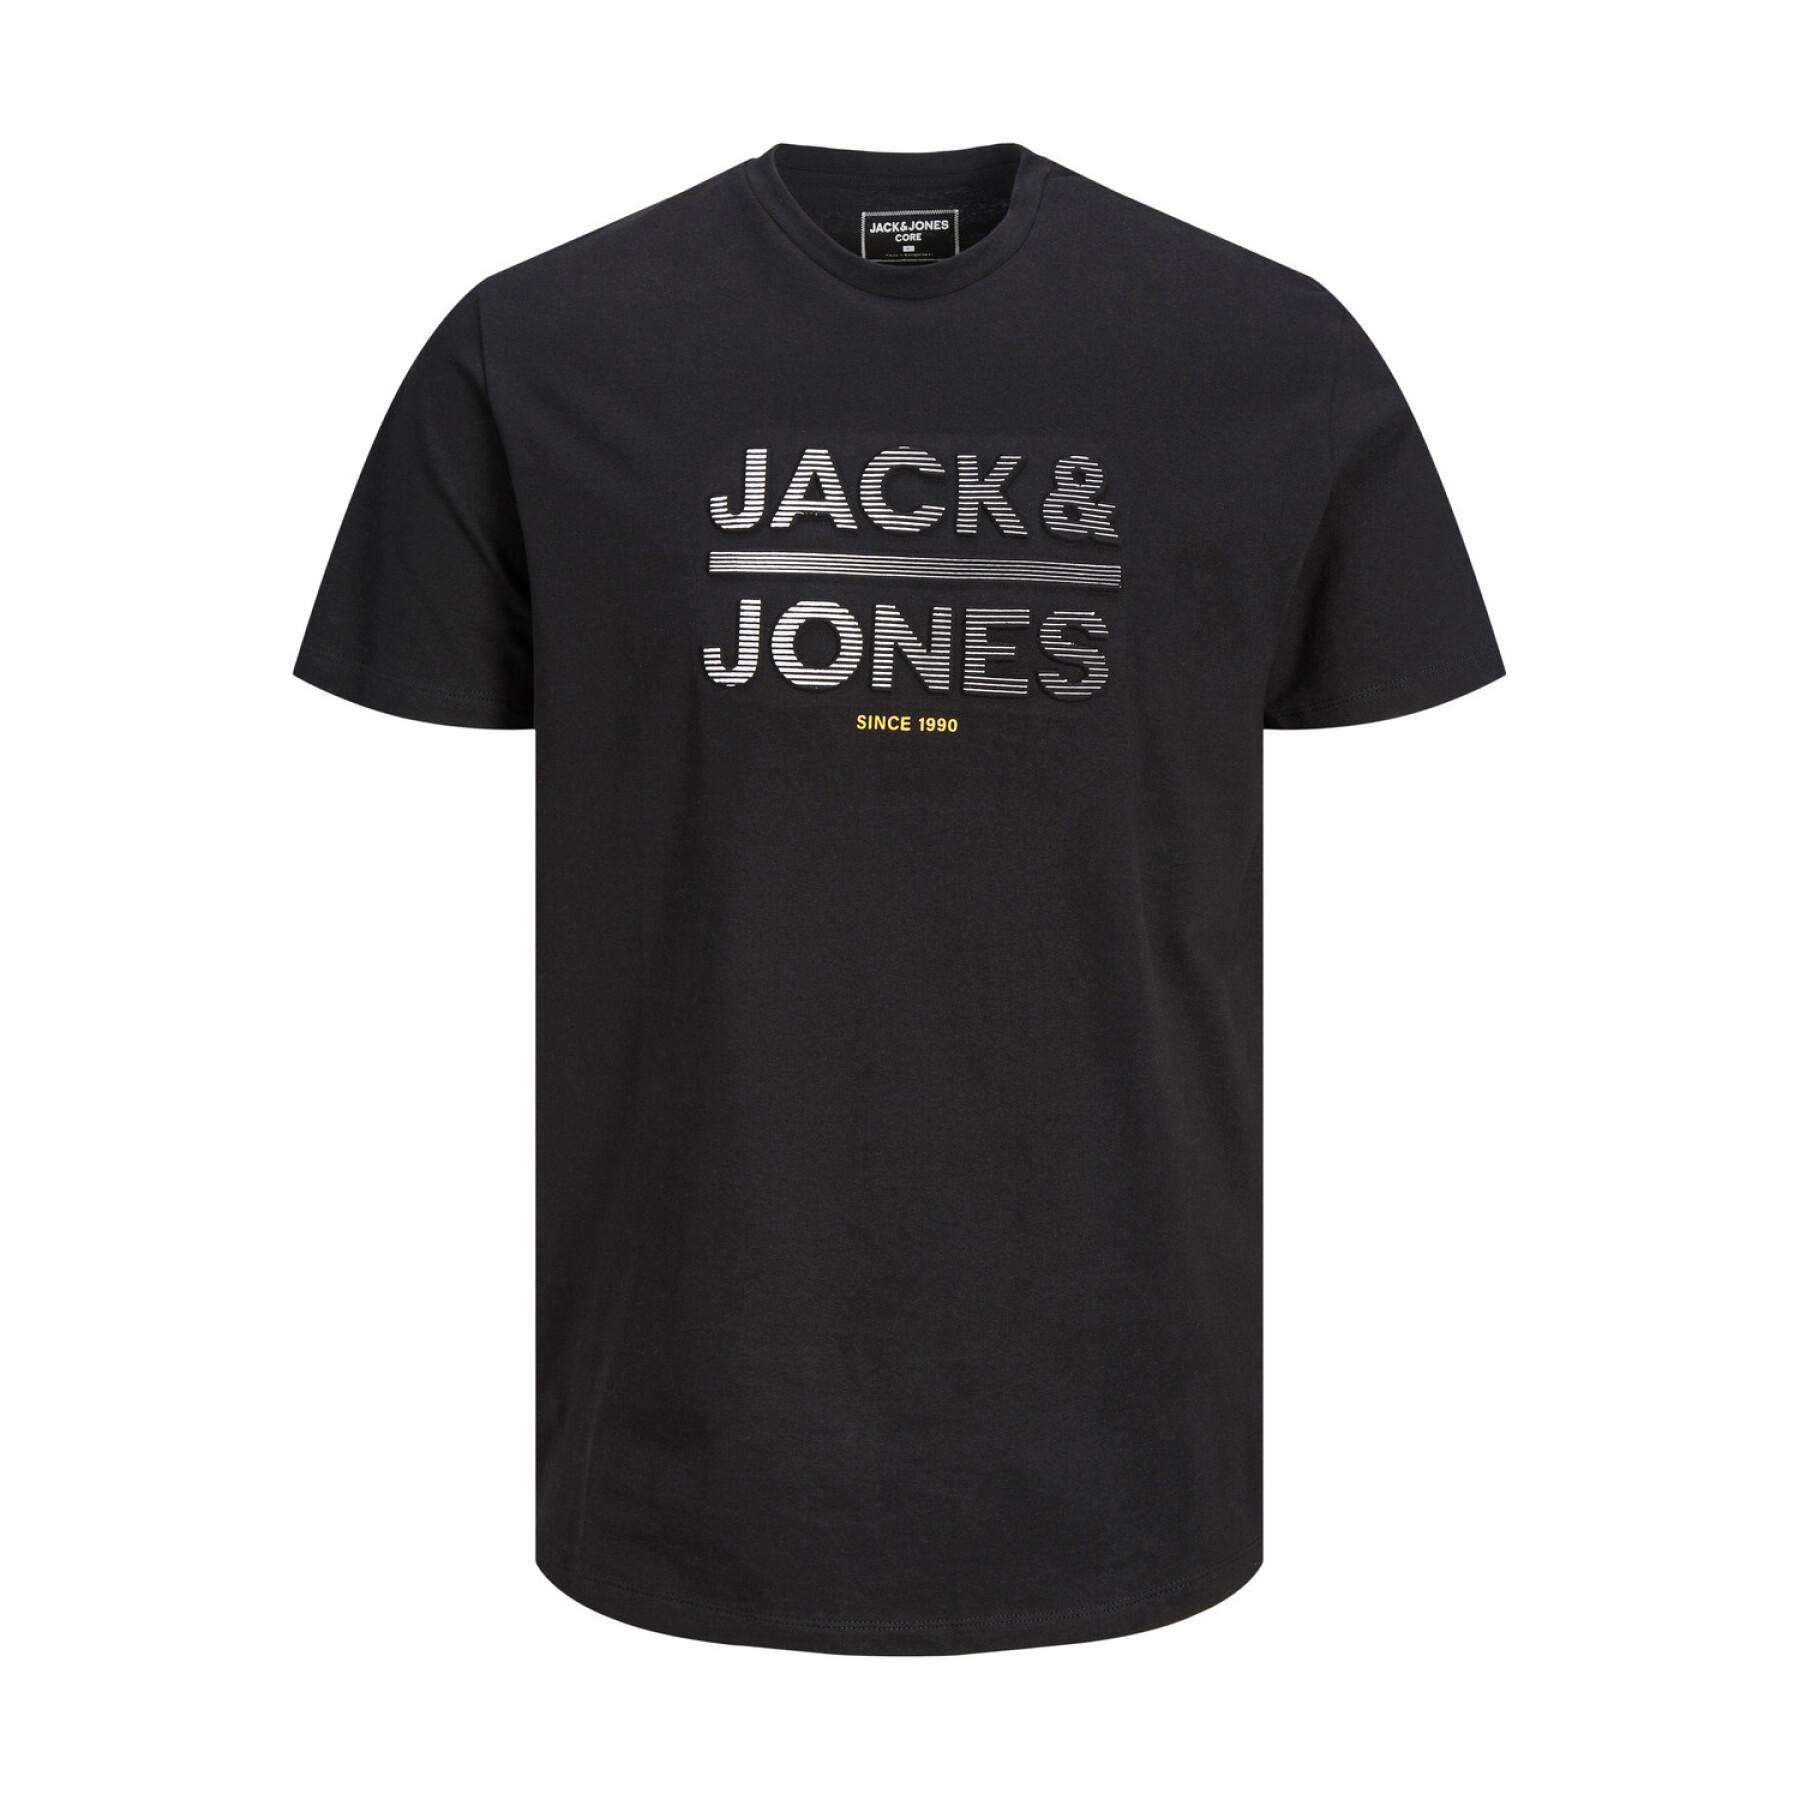 Maglietta Jack & Jones Galo